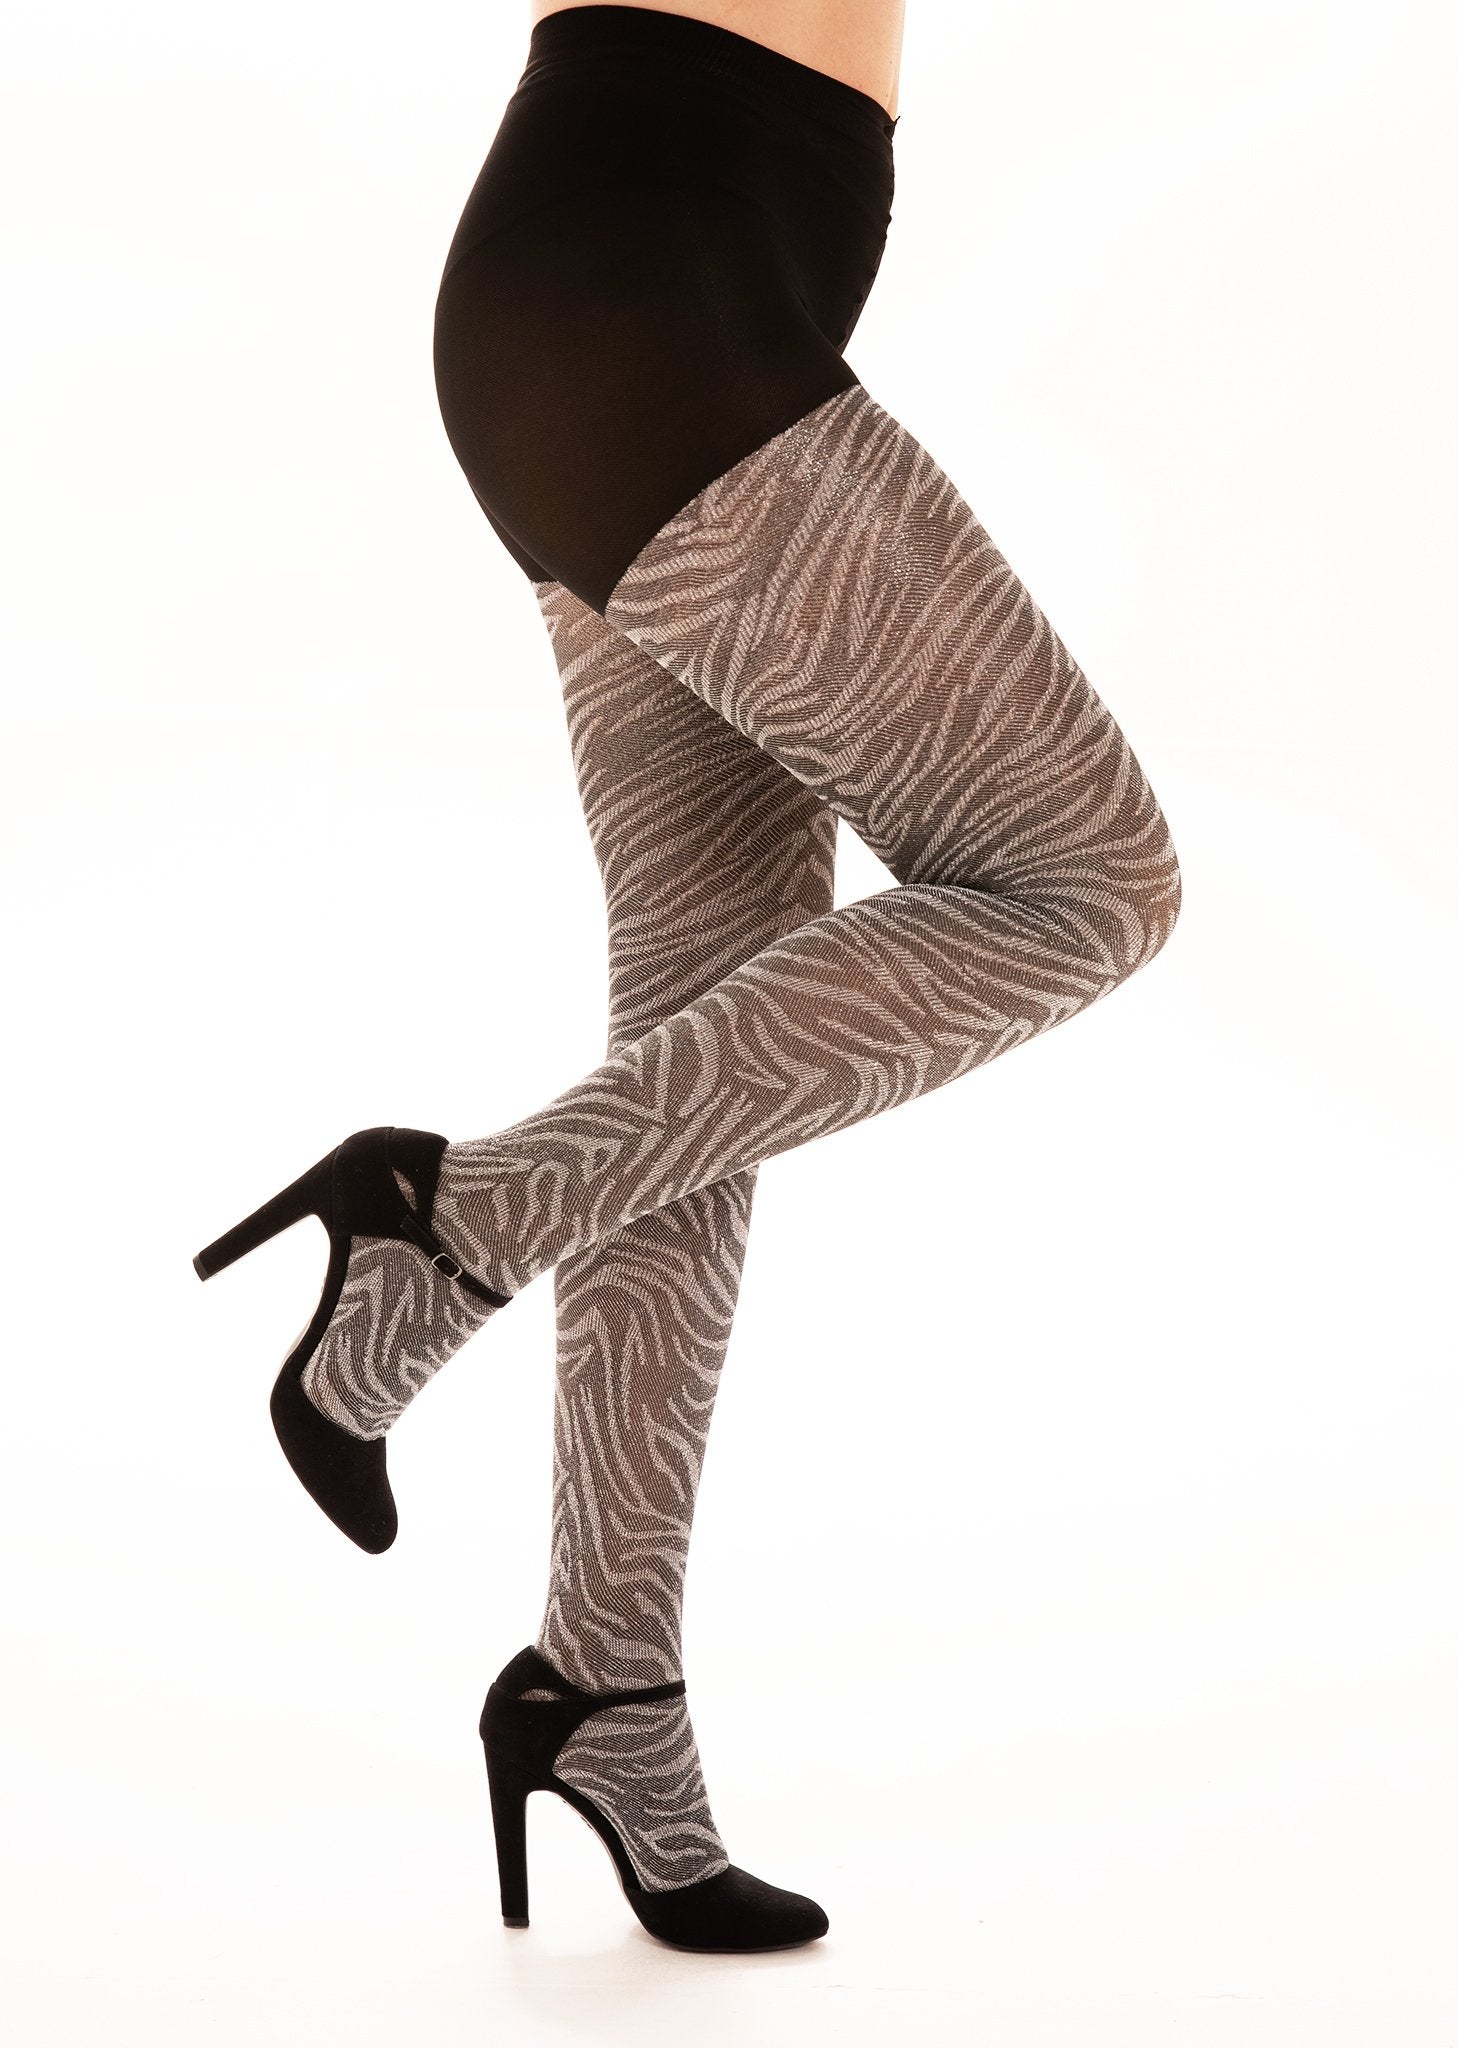 Pamela Mann Zebra Lurex Tights - Silver lamí© fashion tights with a woven zebra pattern and plain black boxer brief top.